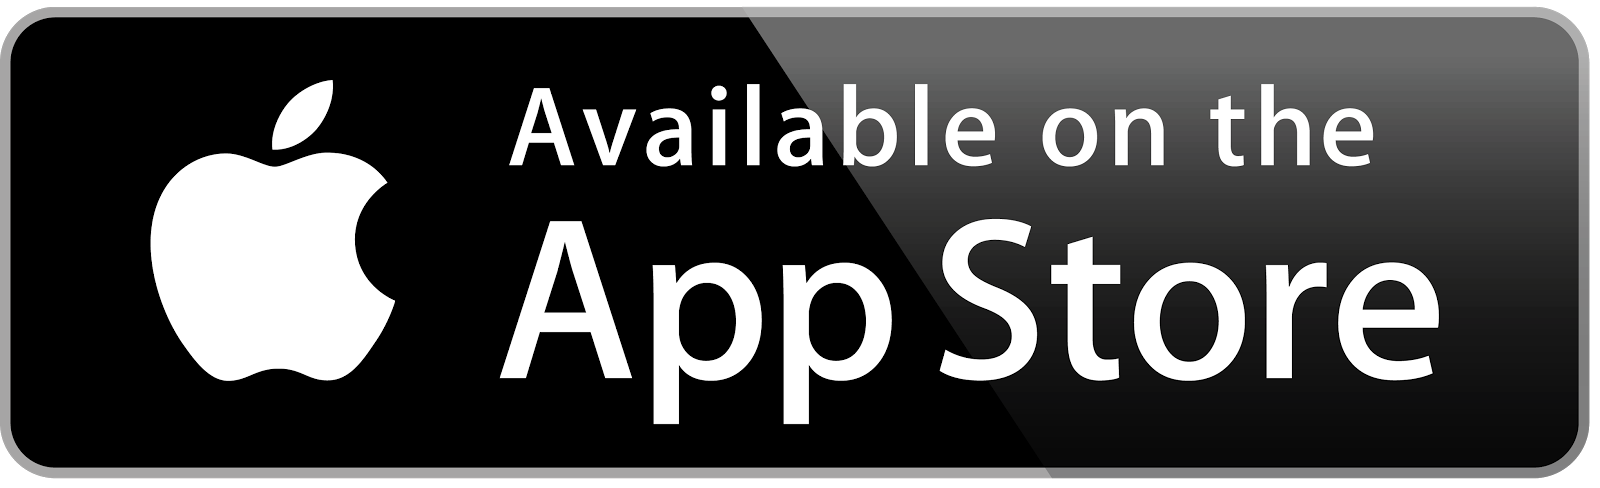 Free RFN App for iPhone & iPad